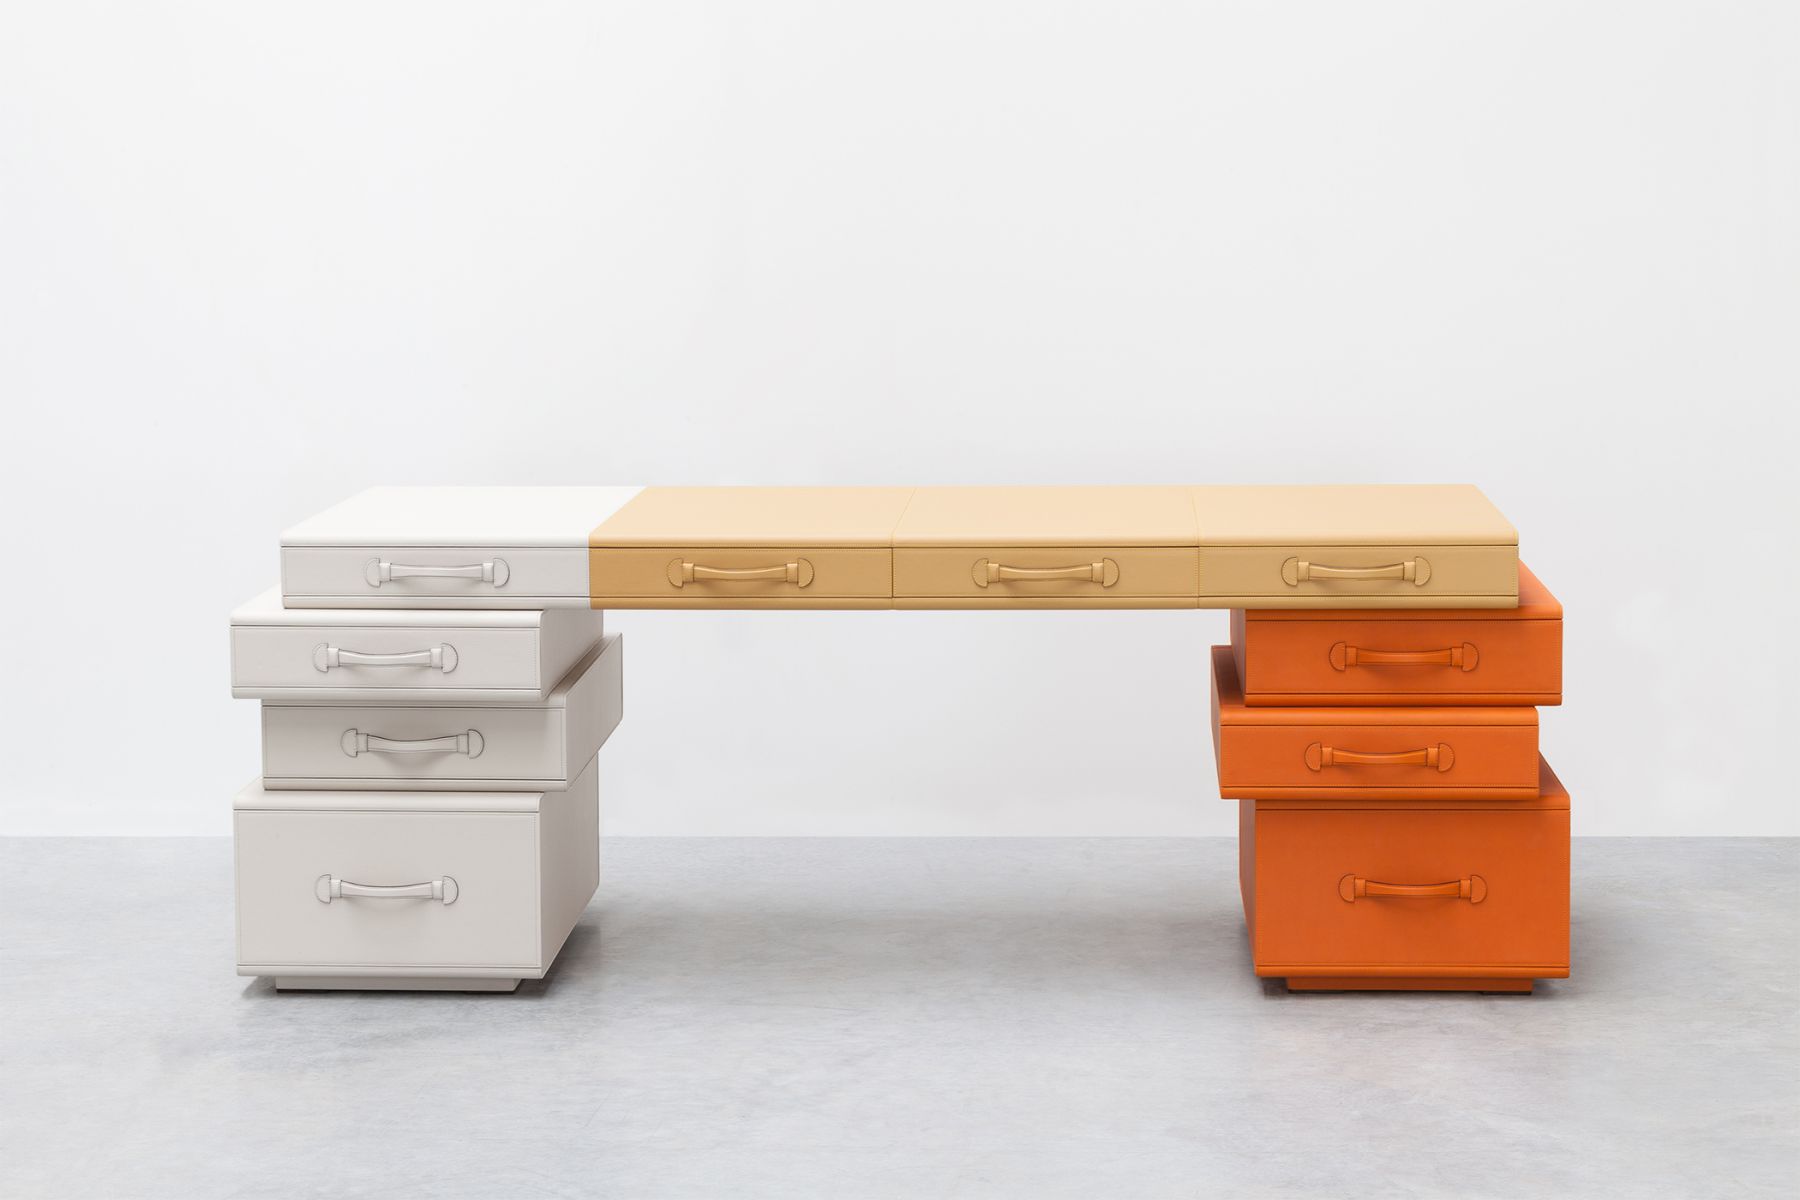 Scrivania 'Desk of briefcases' Maarten De Ceulaer pic-5